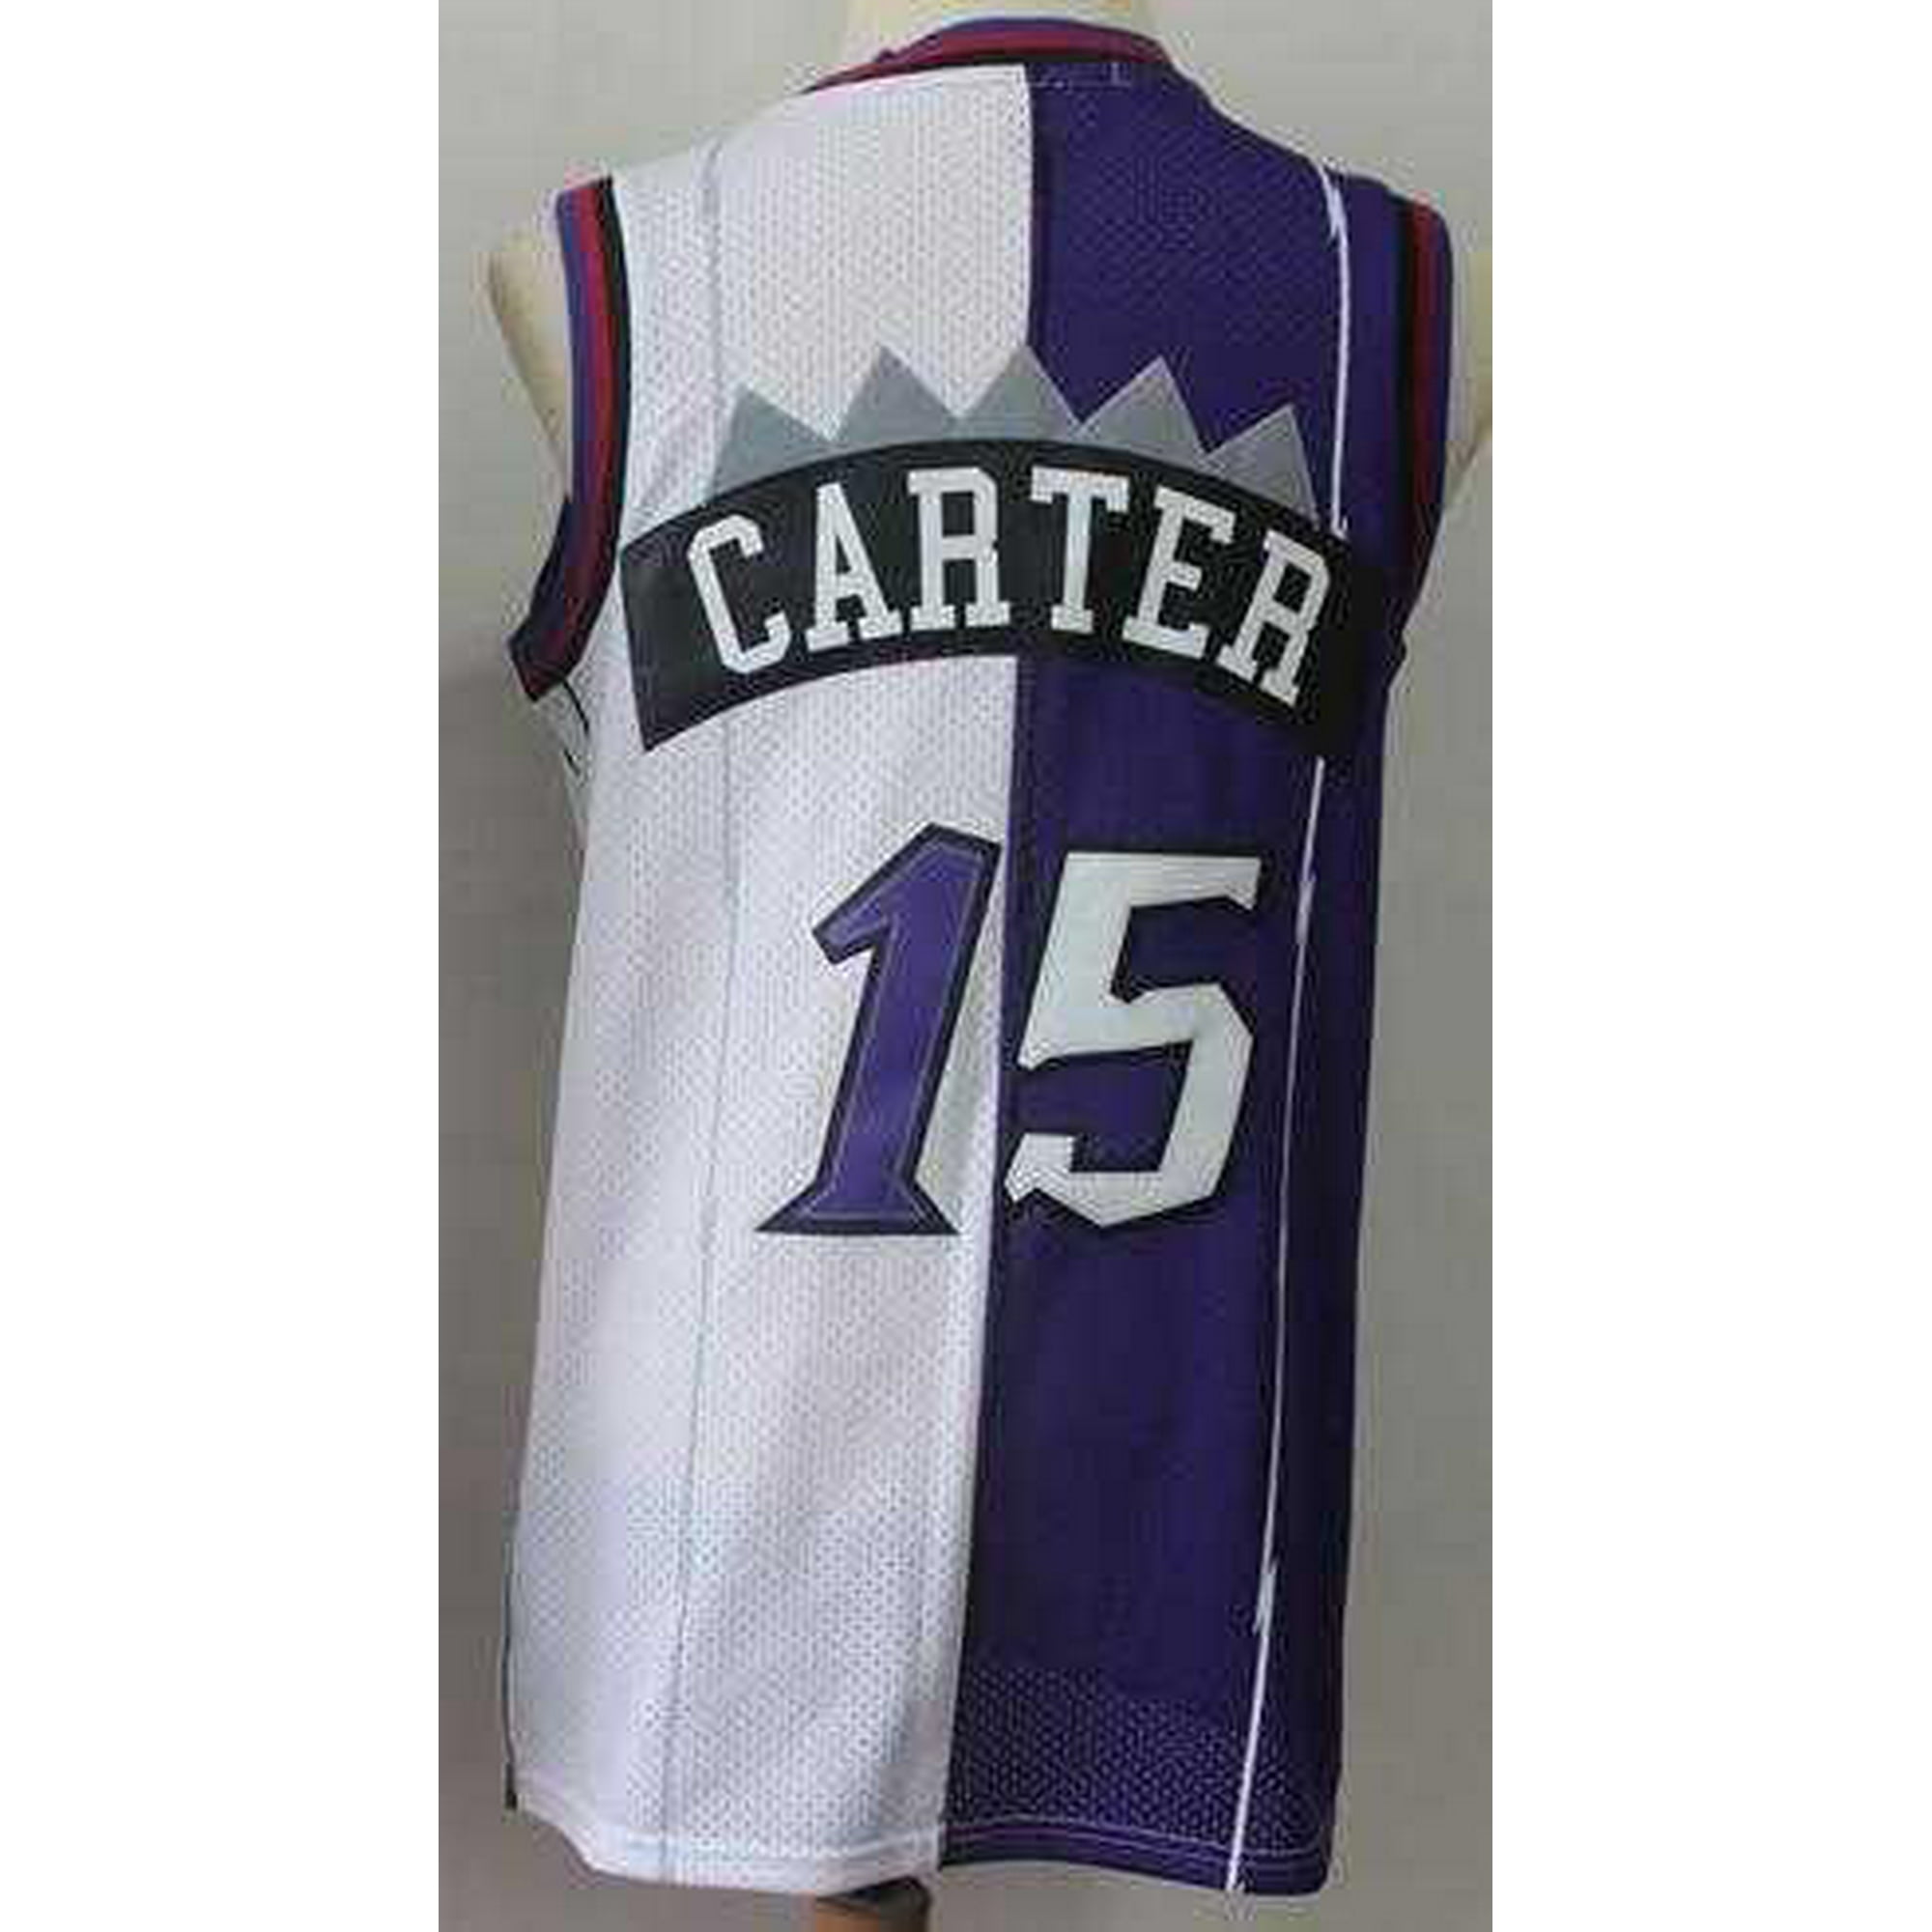 NBA_ Retro Vintage Classic Tracy #1 McGrady Basketball Jersey Short Purple  White Black Wholesale Cheap NCAA College Mens Vince #15 Carter Jerseys ''nba''jersey 